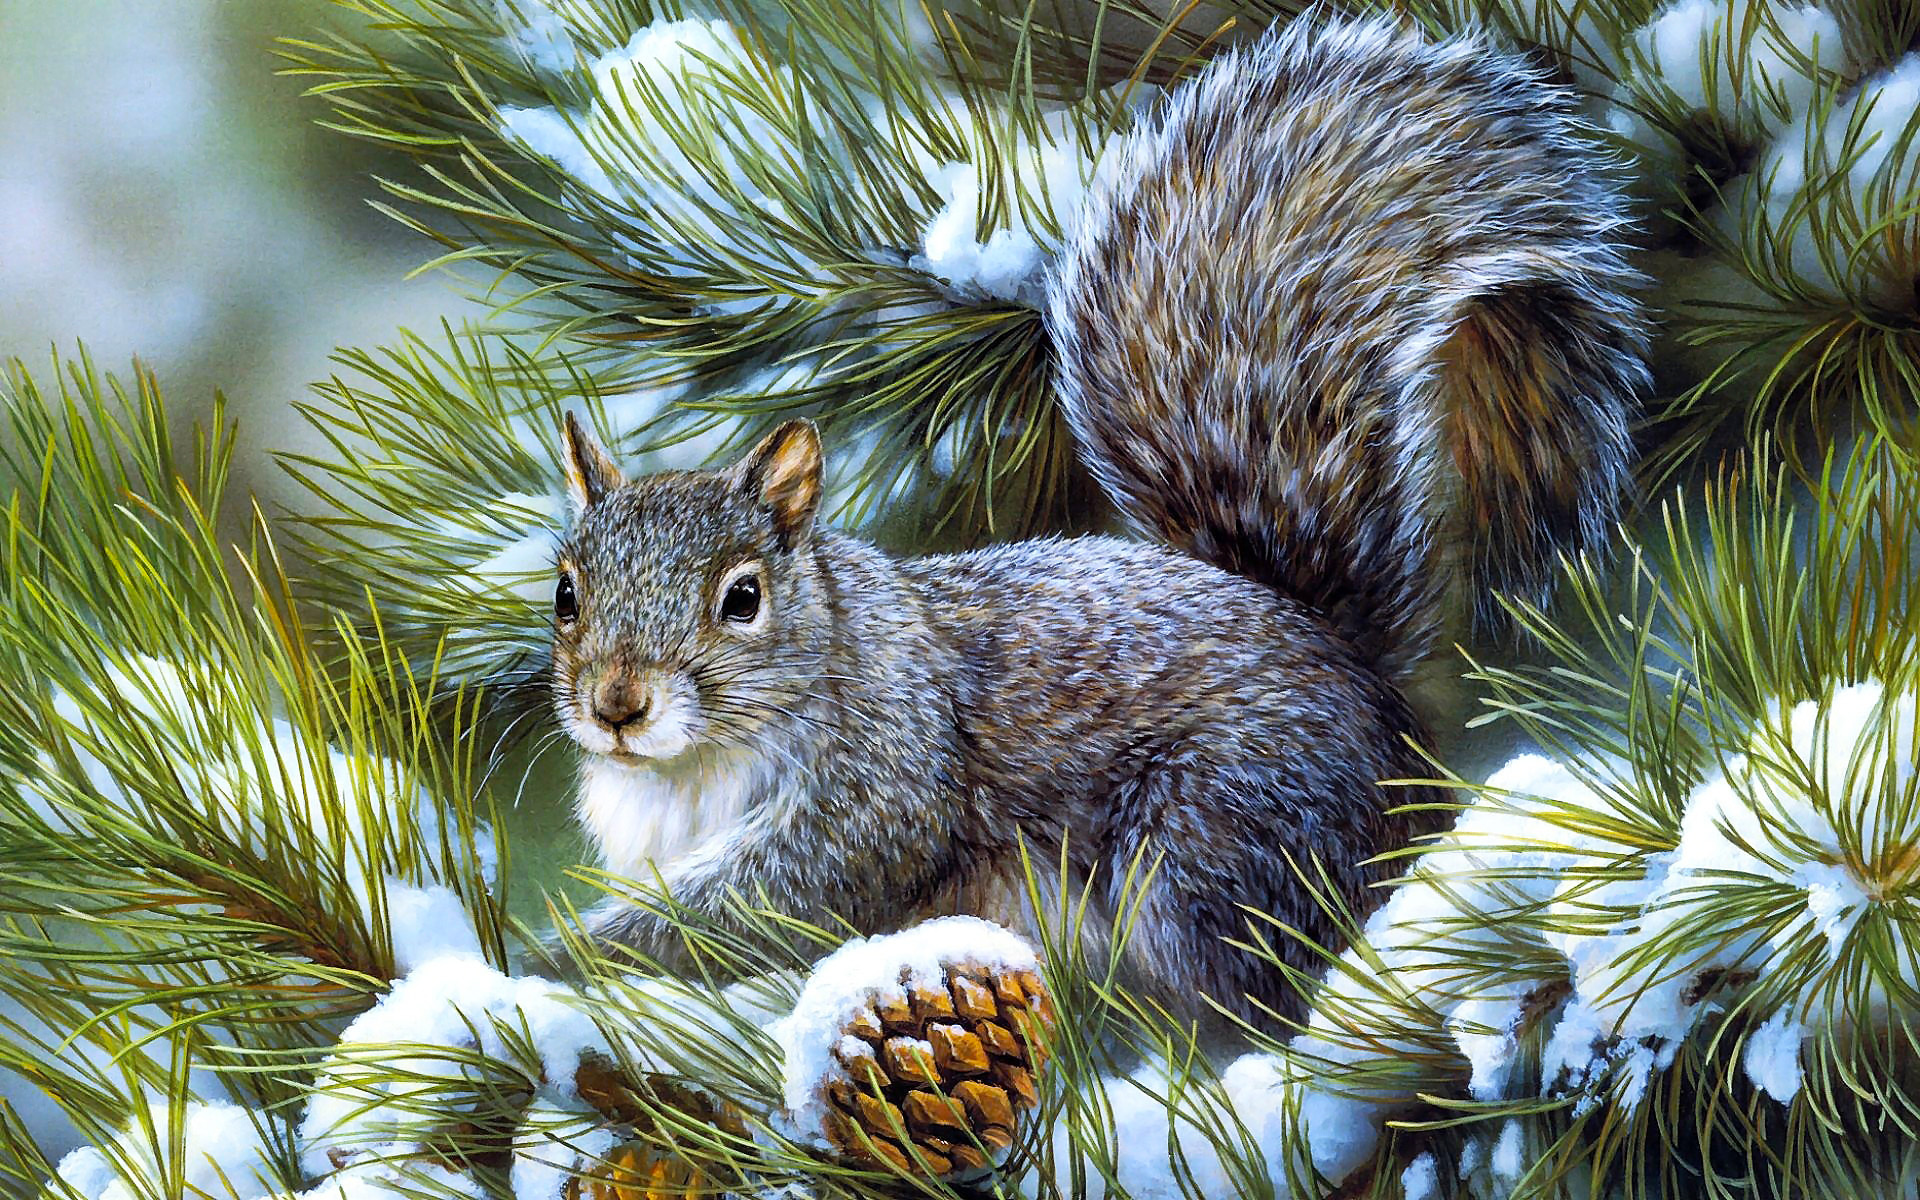  winter snow seasons trees branch limb fir pine face eyes whiskers